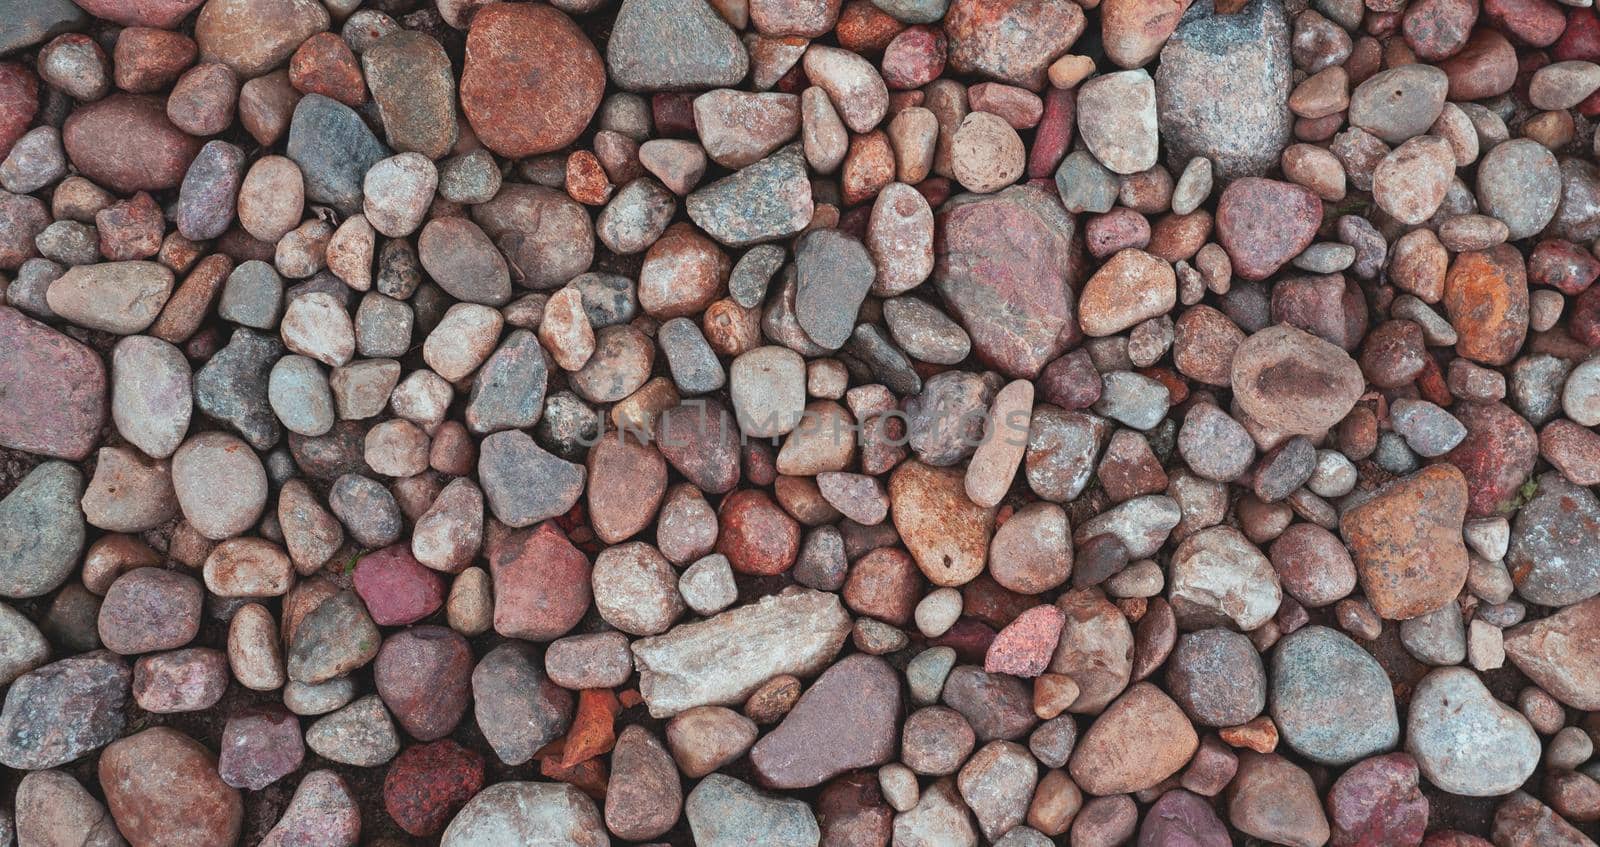 Natural rock pebble backgorund shot by gelog67